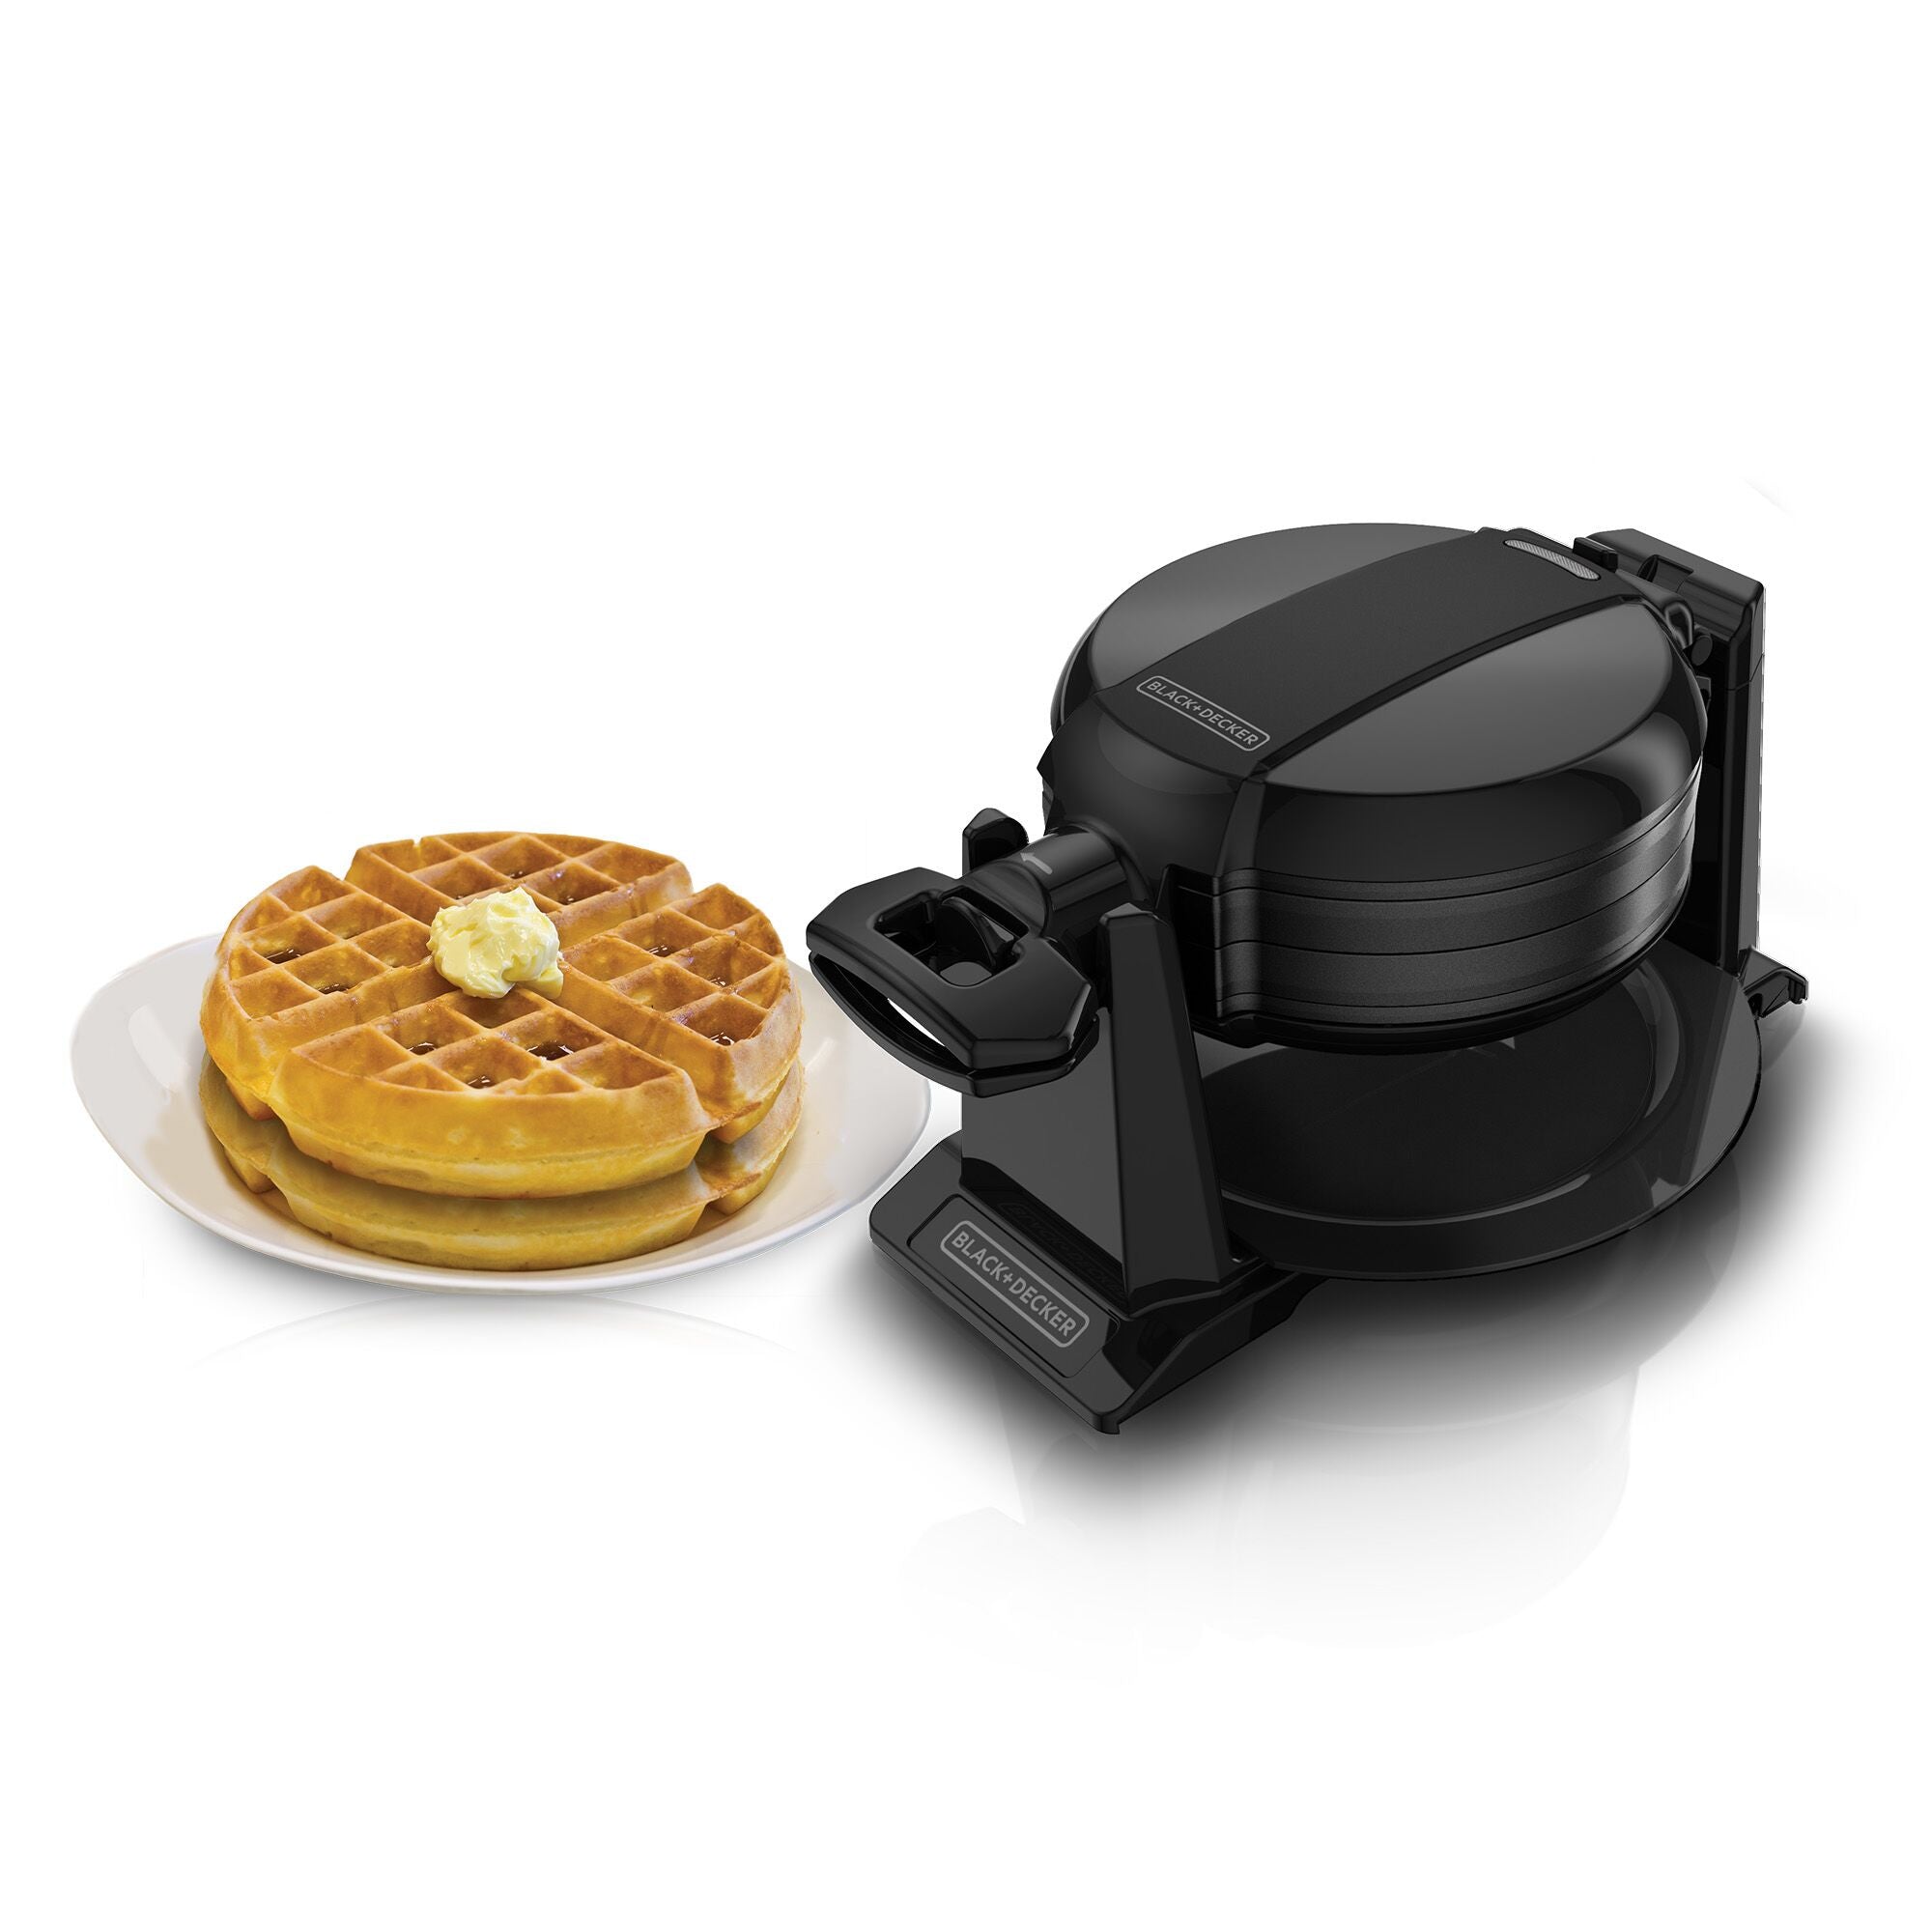 Like New Black and Decker double Flip Waffle Maker - household